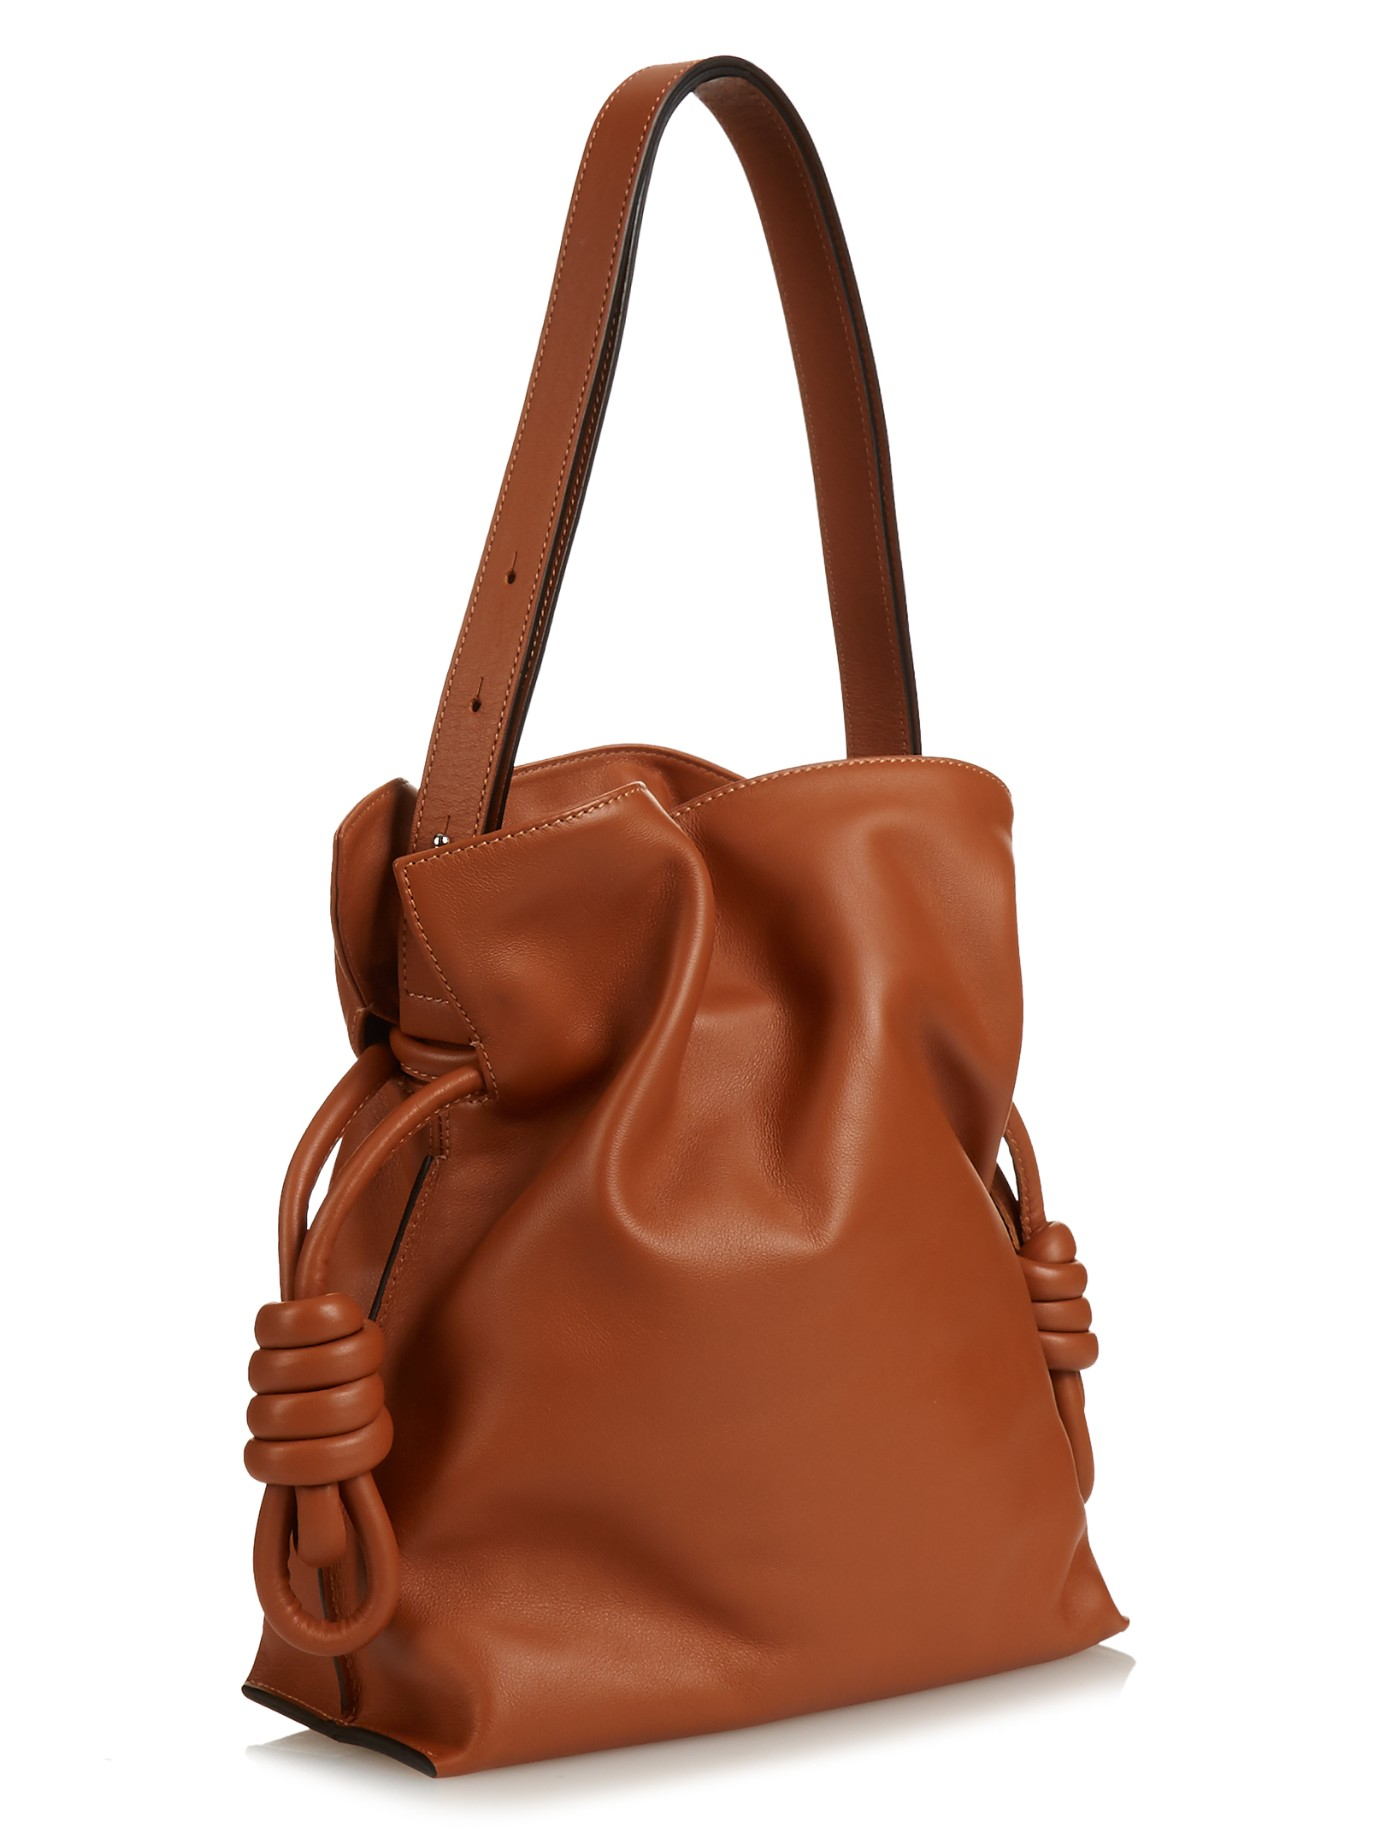 Lyst - Loewe Flamenco Knot Leather Bag in Brown